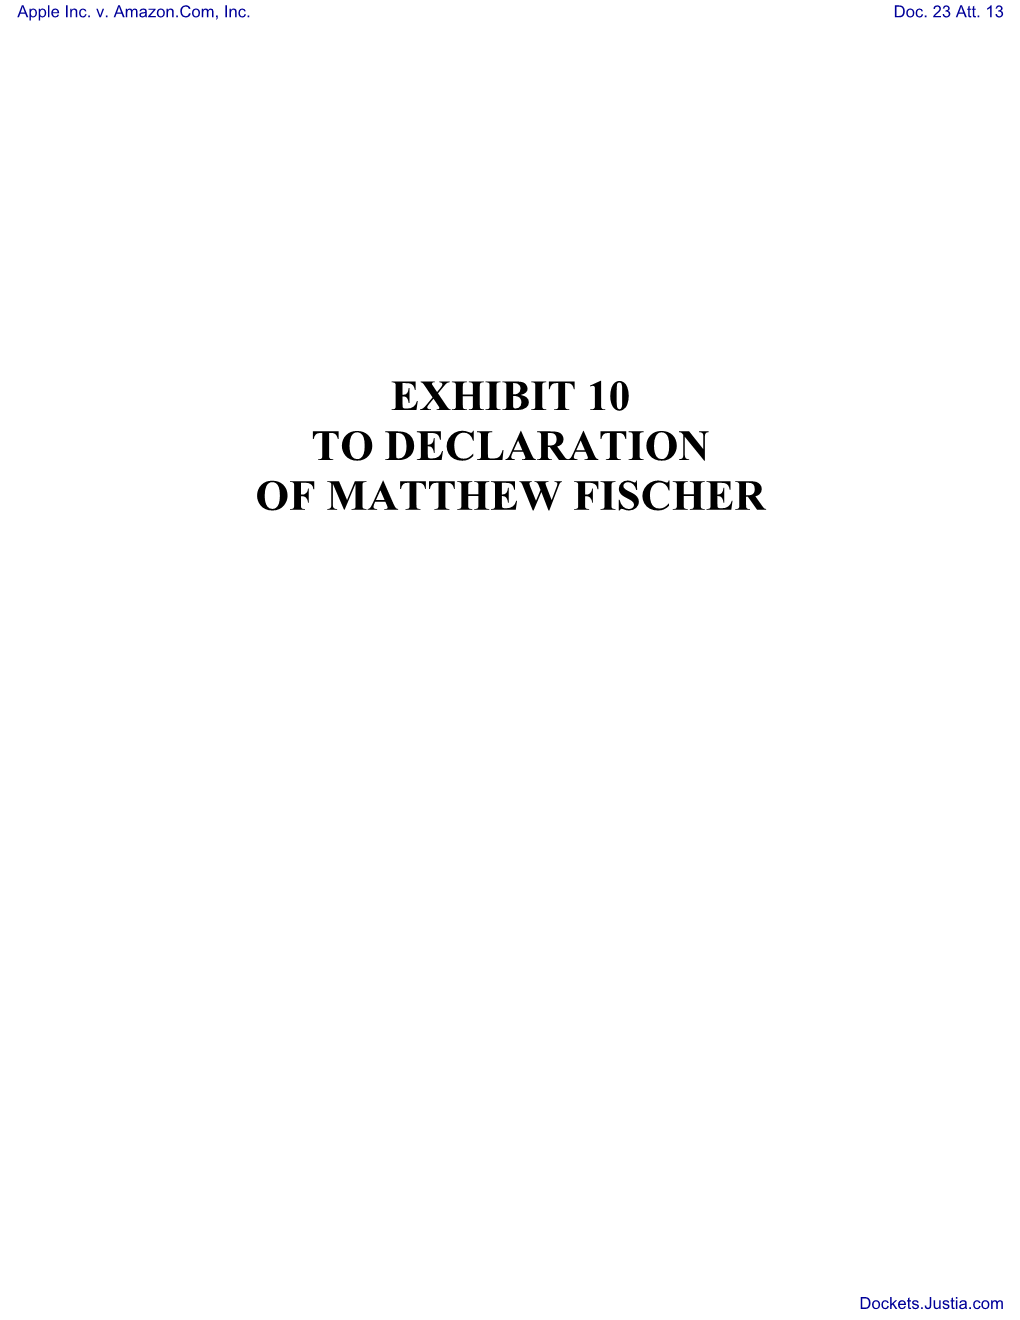 Declaration of Matthew Fischer in Support of 18 MOTION For